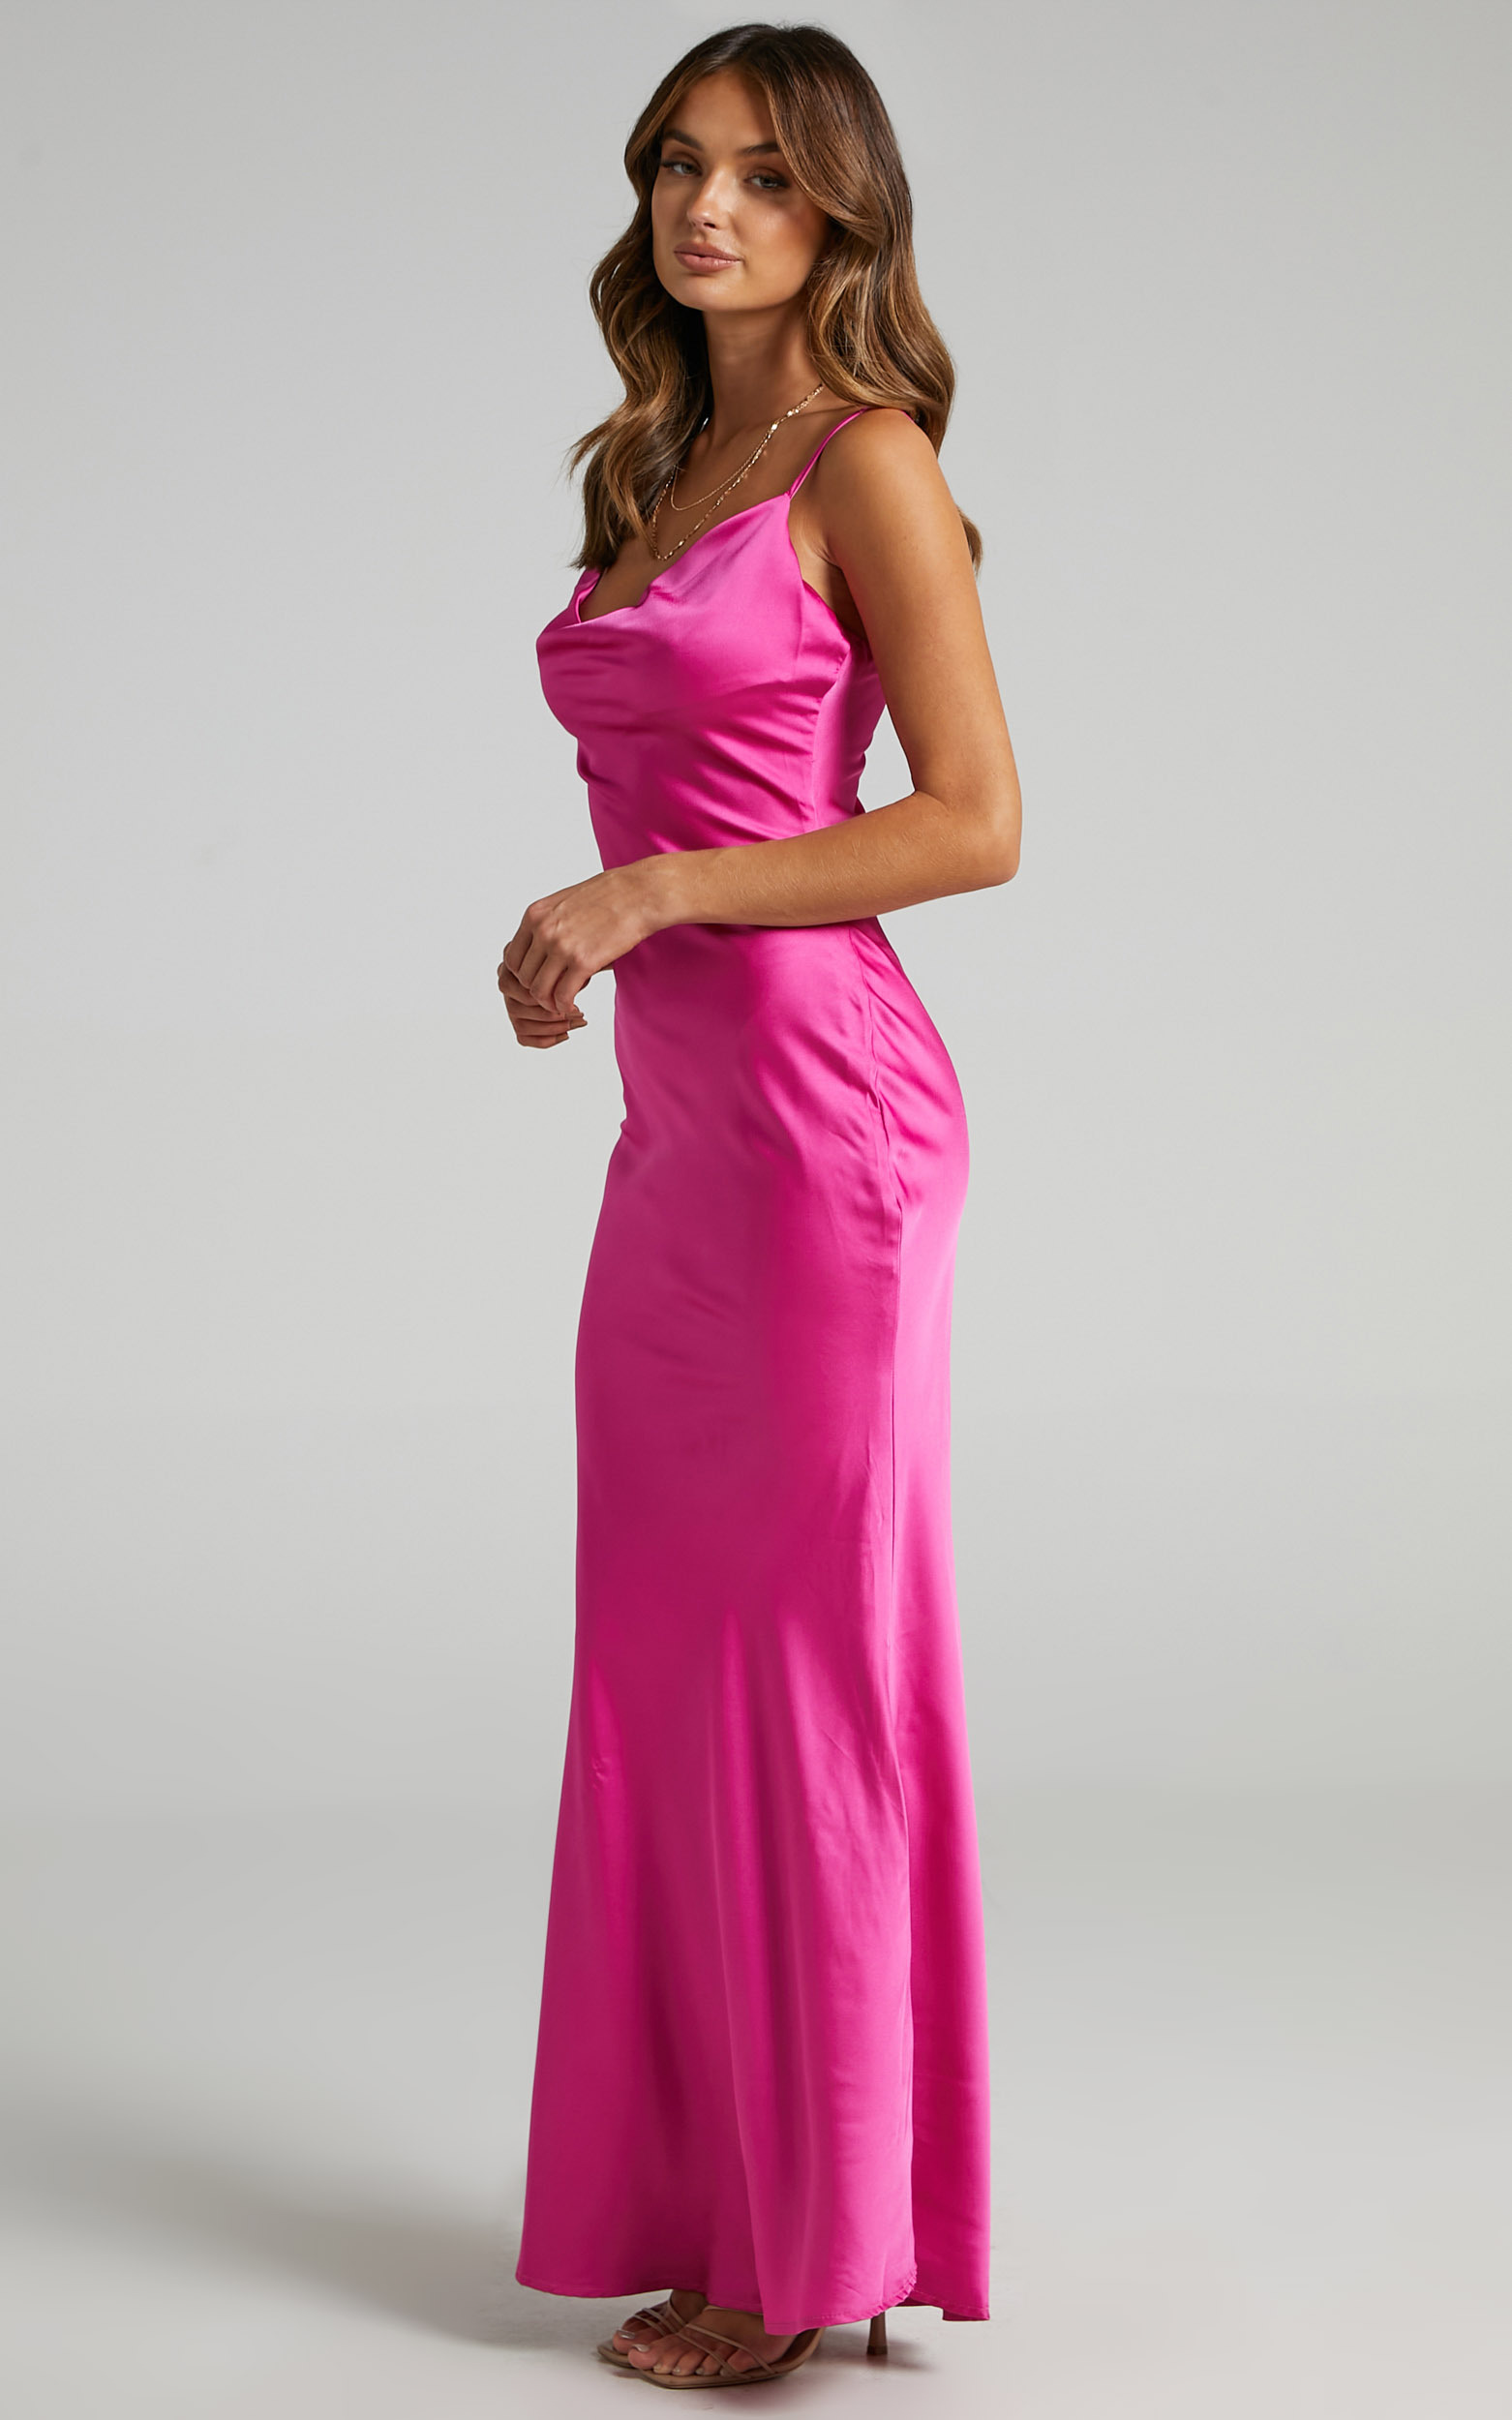 Lunaria Cowl Neck Maxi Dress in Hot Pink Satin | Showpo USA